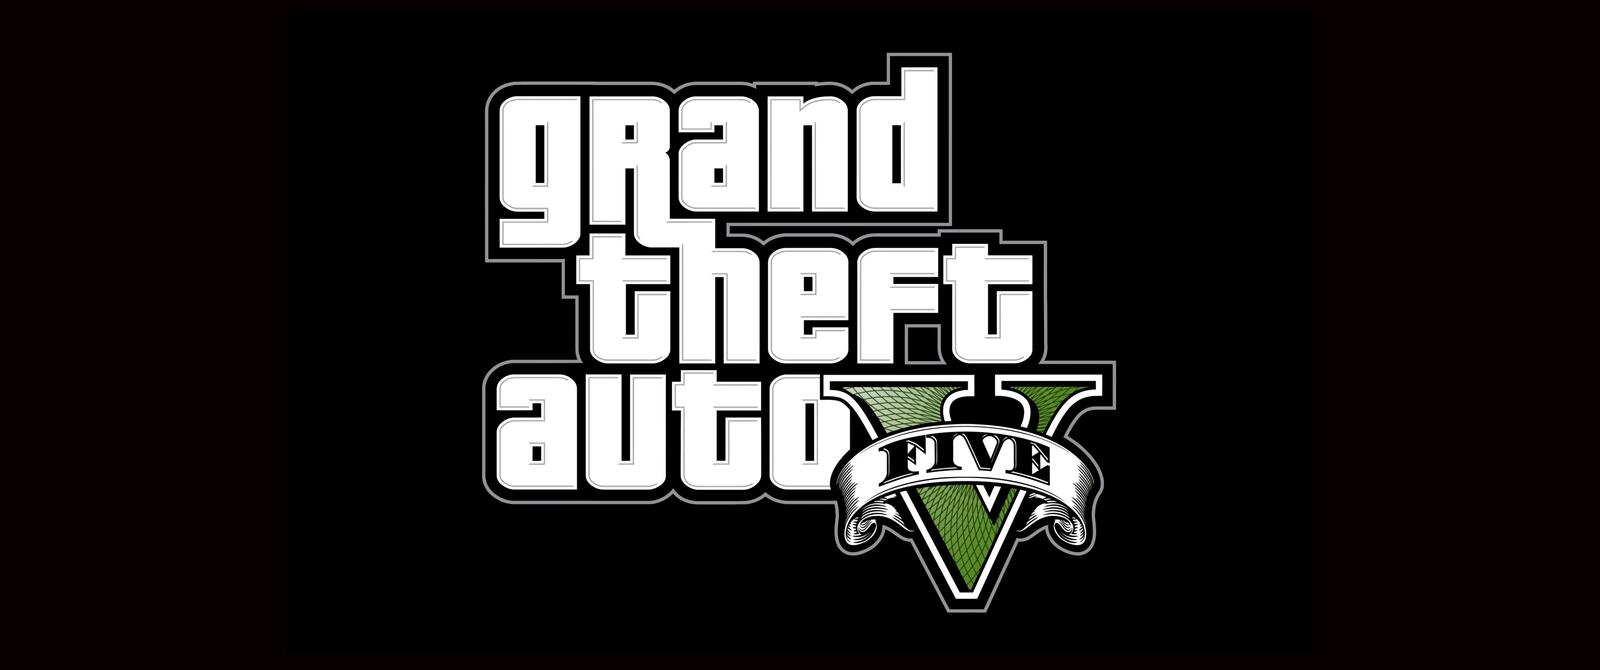 Free photo Grand Theft Auto V logo picture.